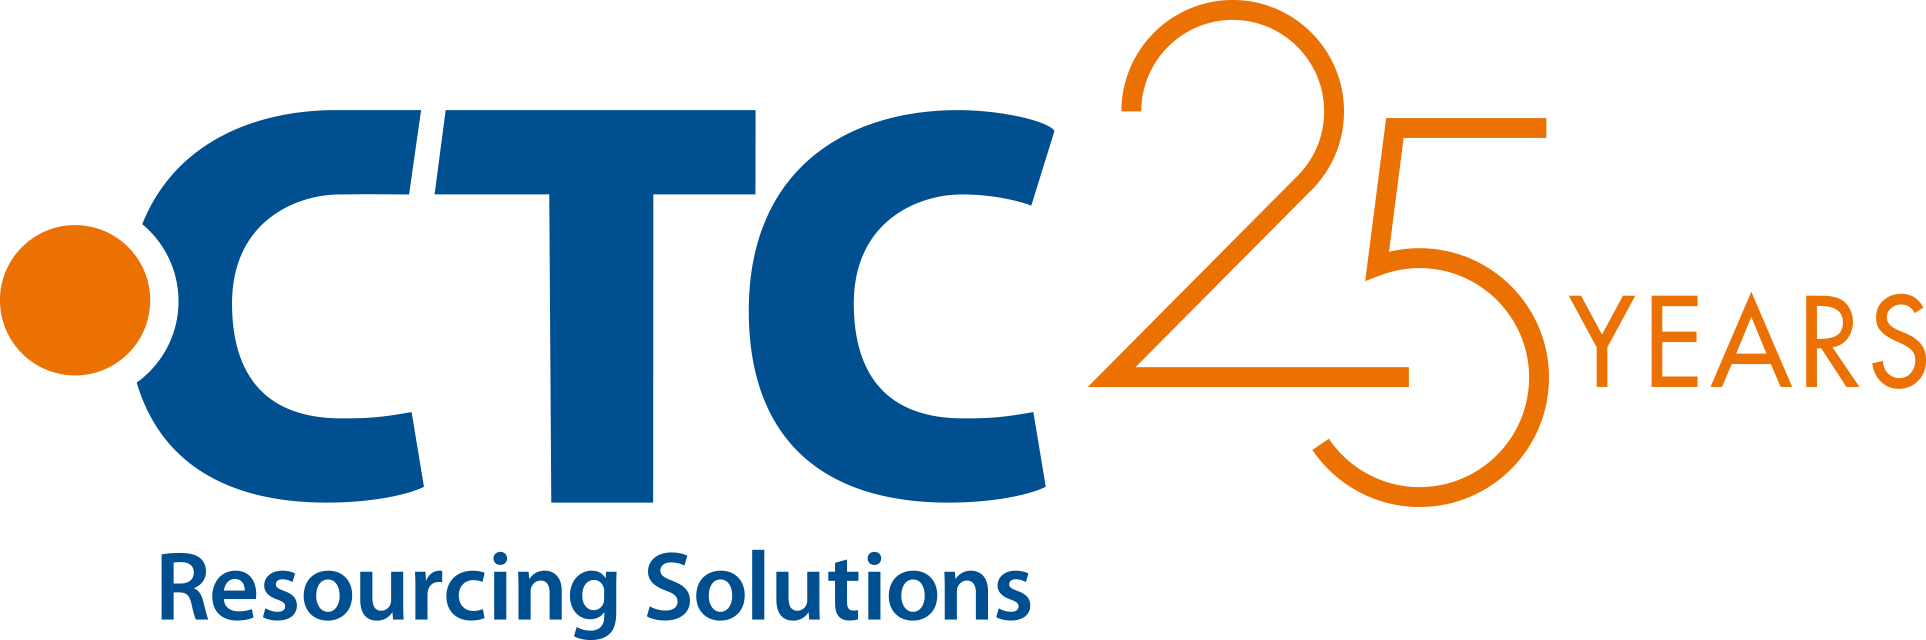 CTC_Logo_25Years_RGB